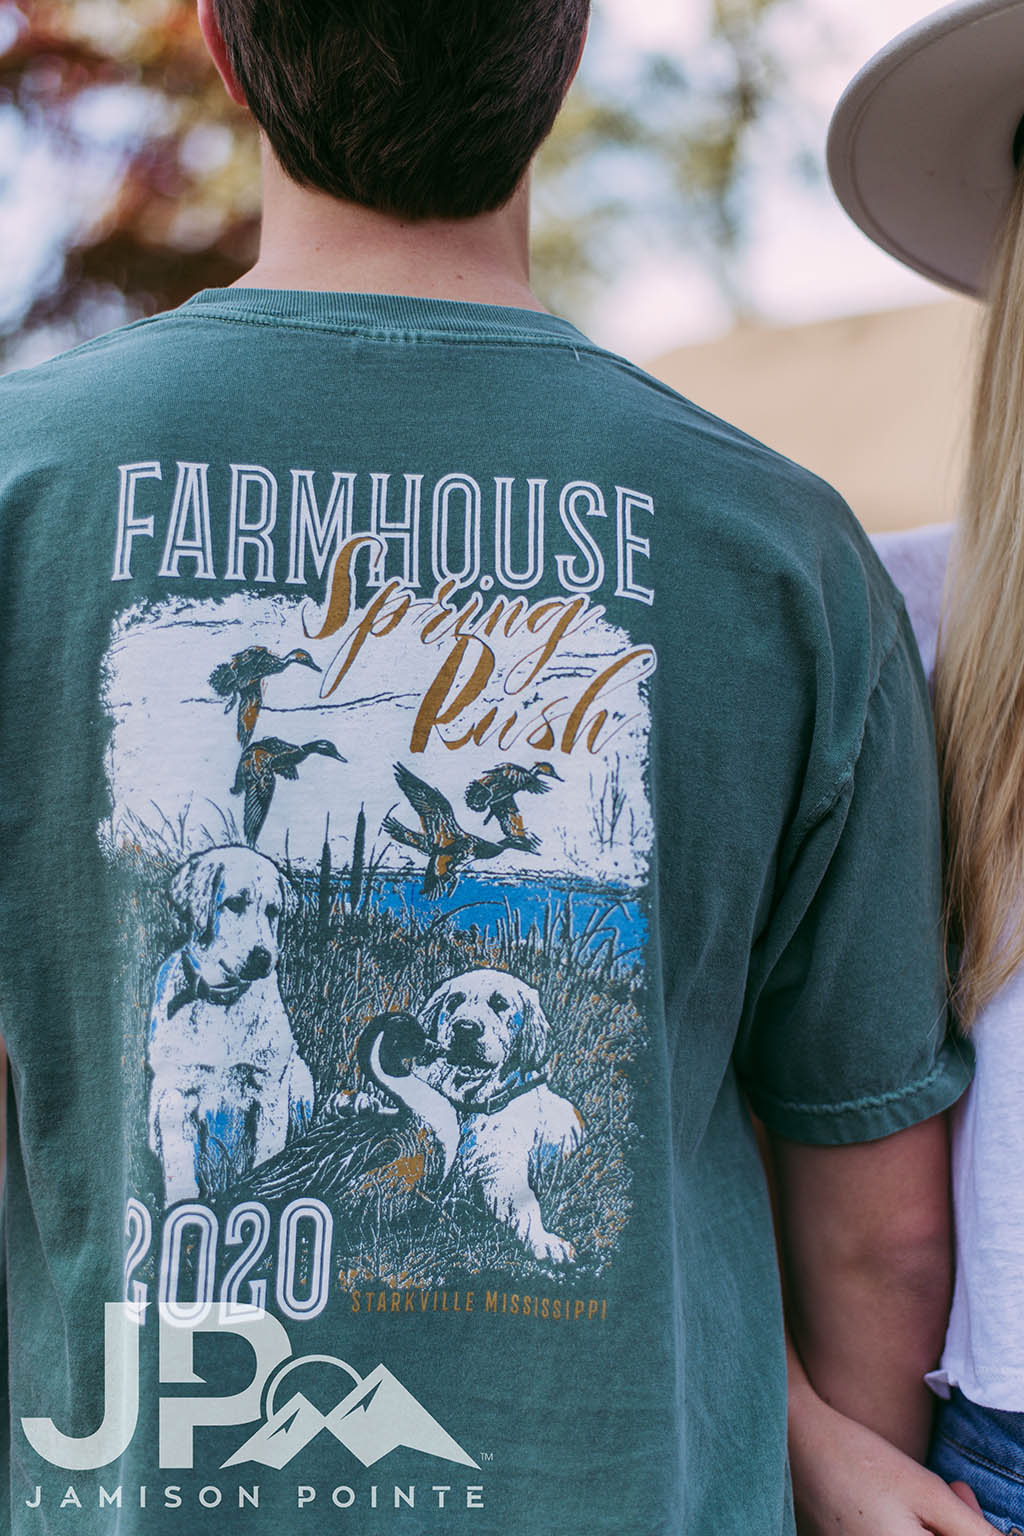 Farmhouse Spring Rush Hunting Dog Tee